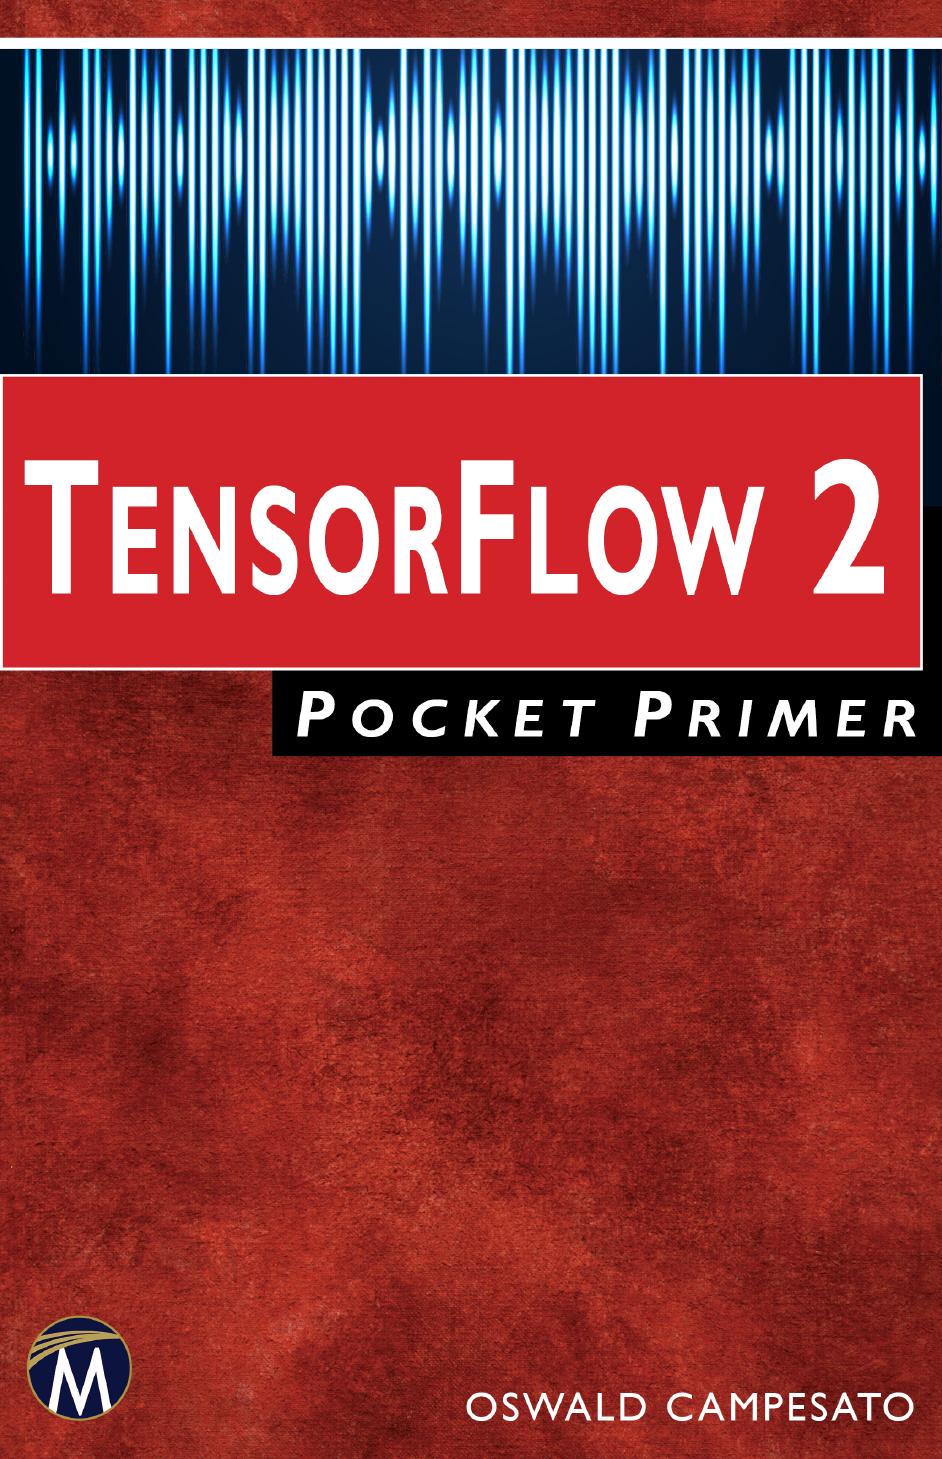 TensorFlow 2 Pocket Primer by Oswald Campesato